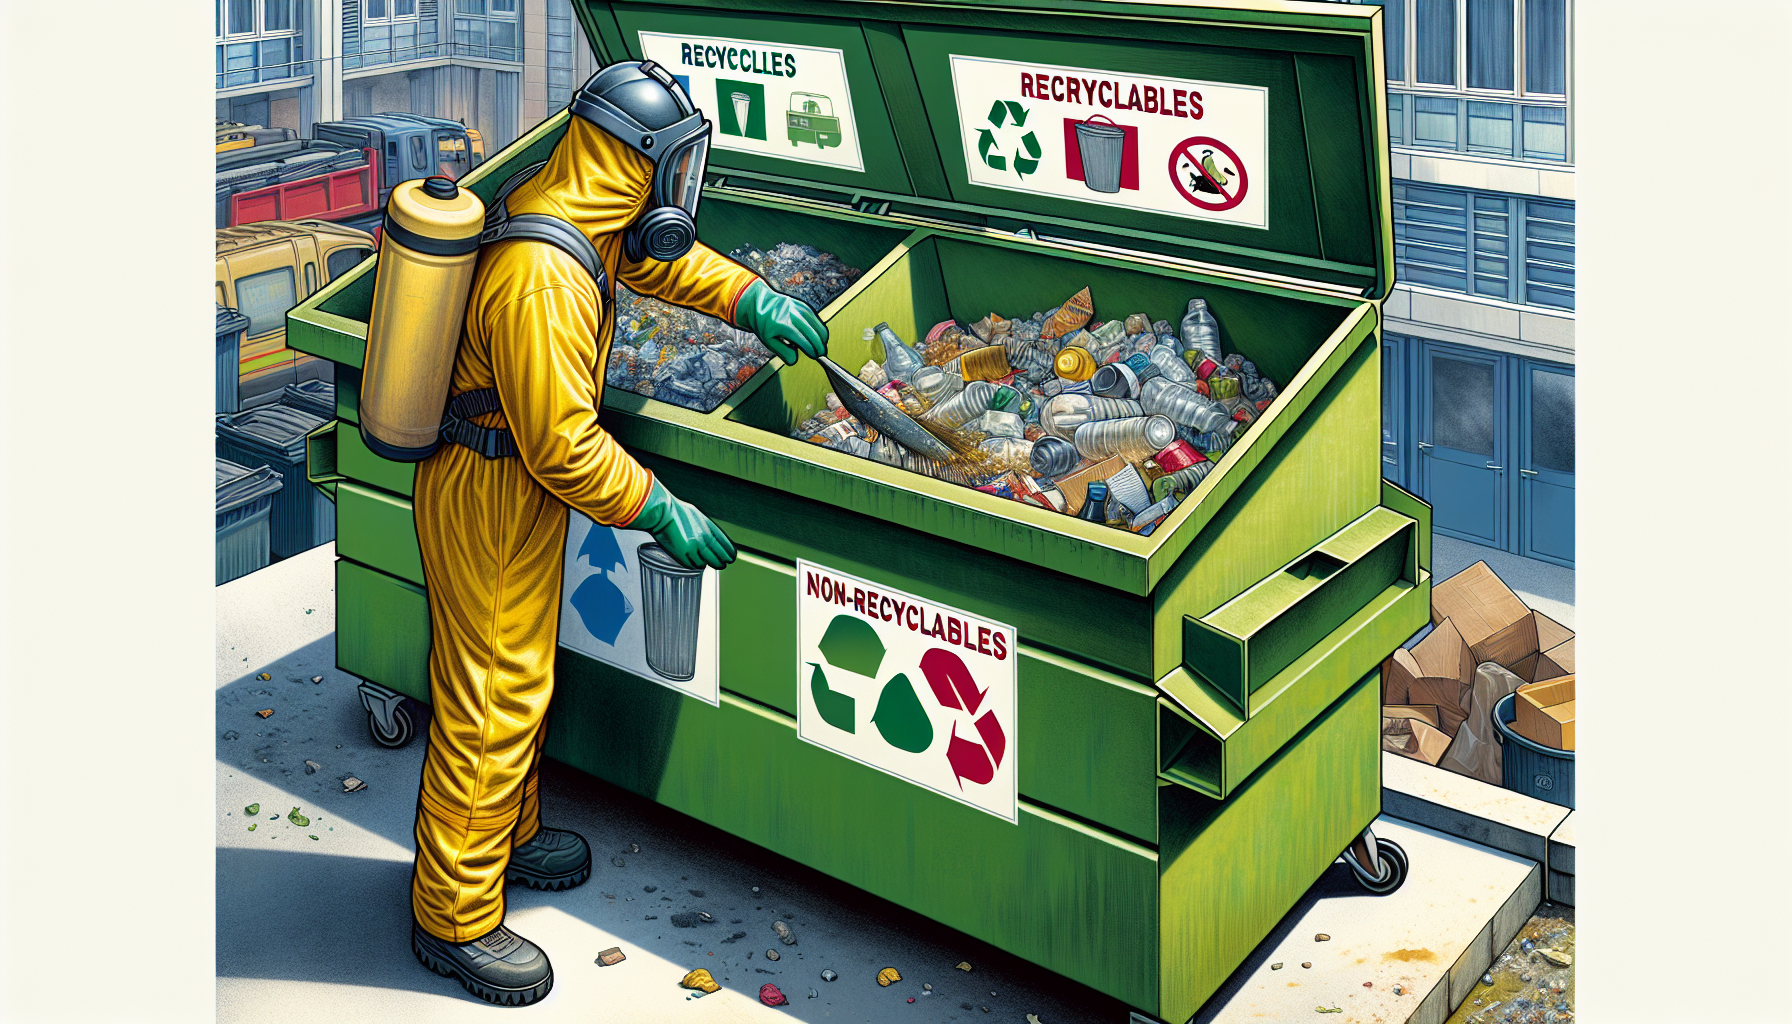 Proper waste disposal in a dumpster